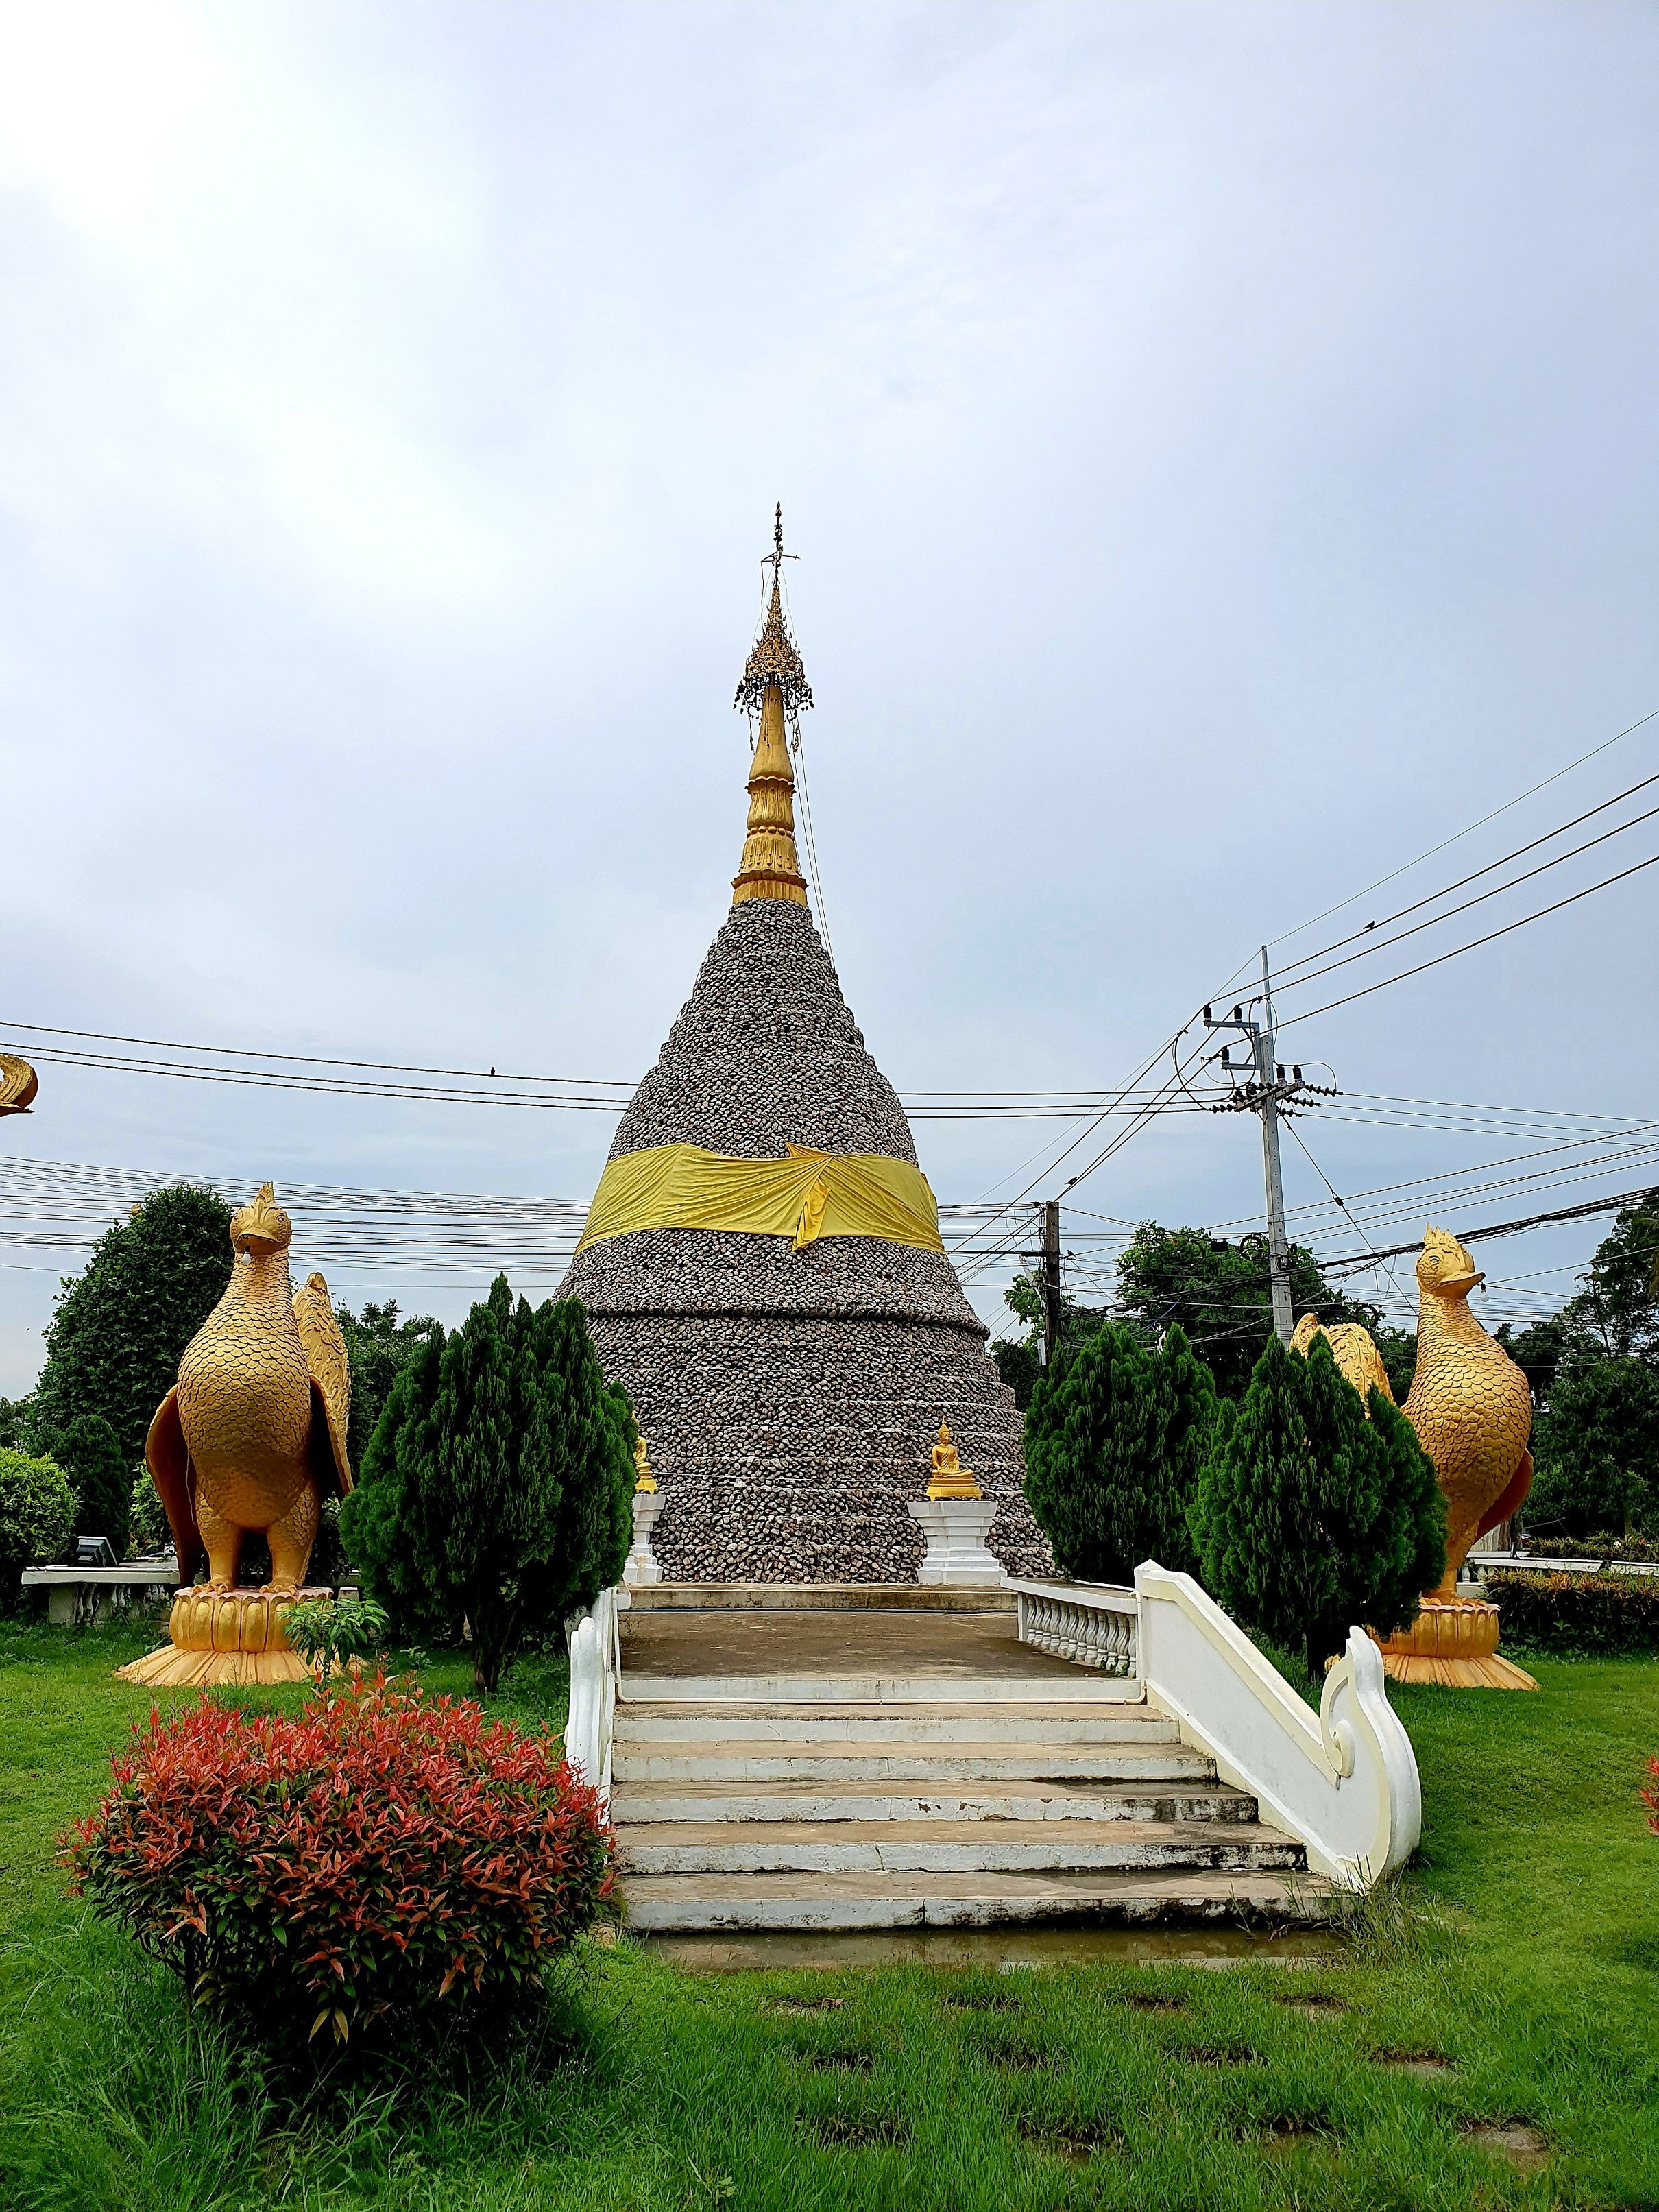 Pagoda made of giant oyster shells, Wat Chedi Hoi, Pathum Thani, Thailand